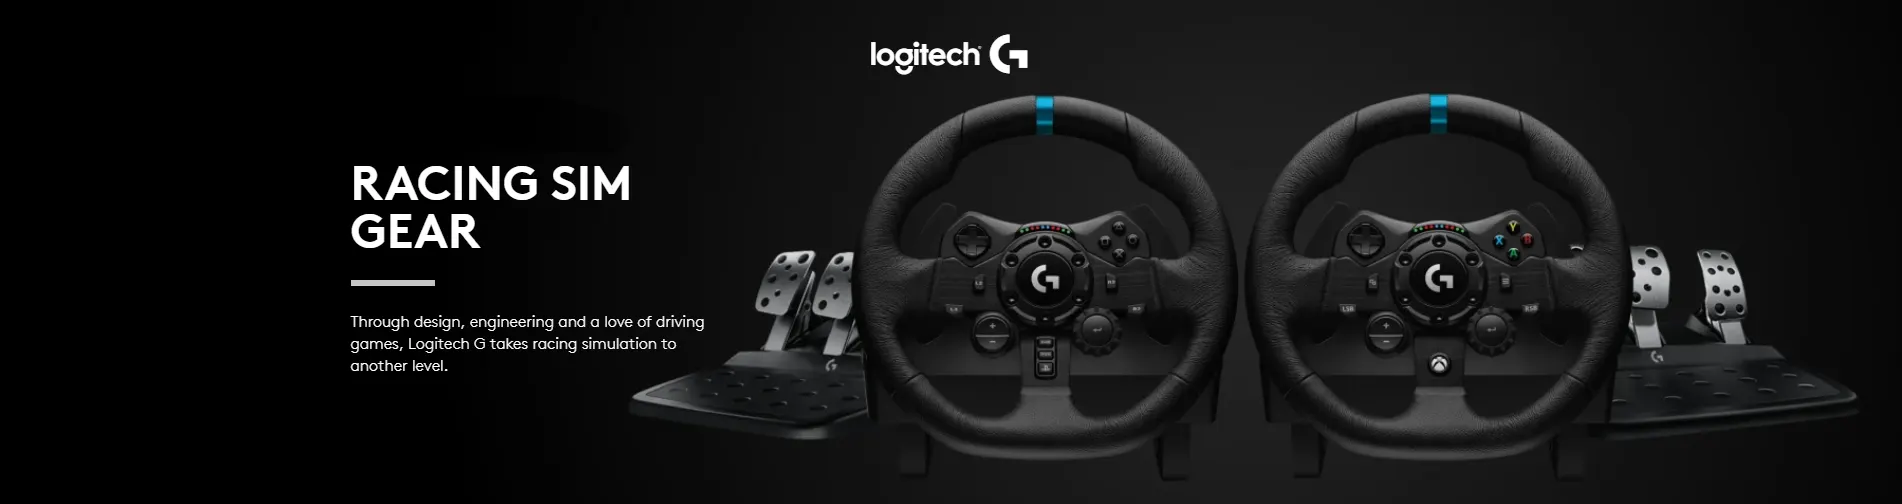 Logitech Racing Wheels Promo